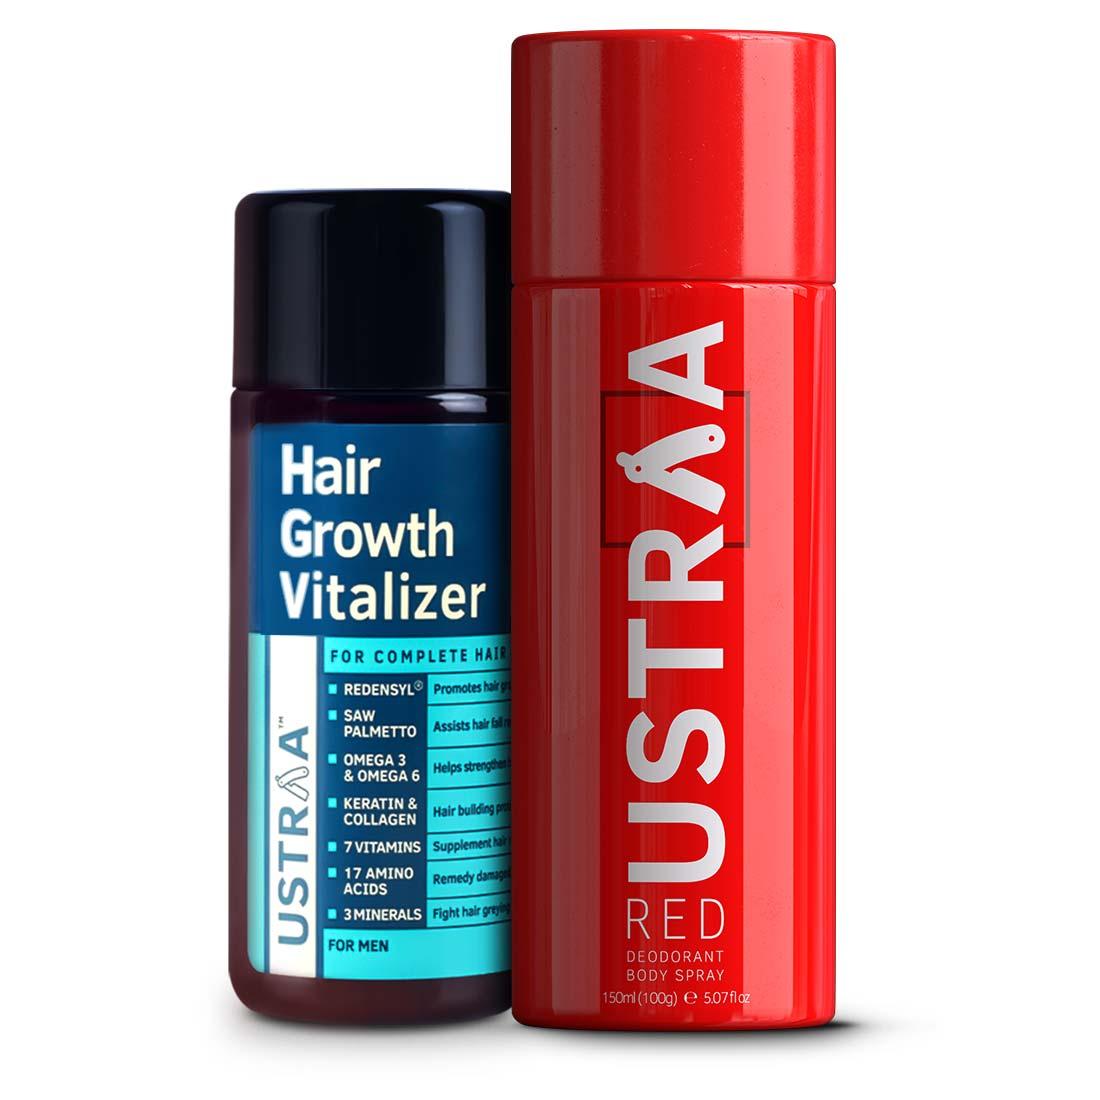 Hair Growth Vitalizer & Red Deodorant